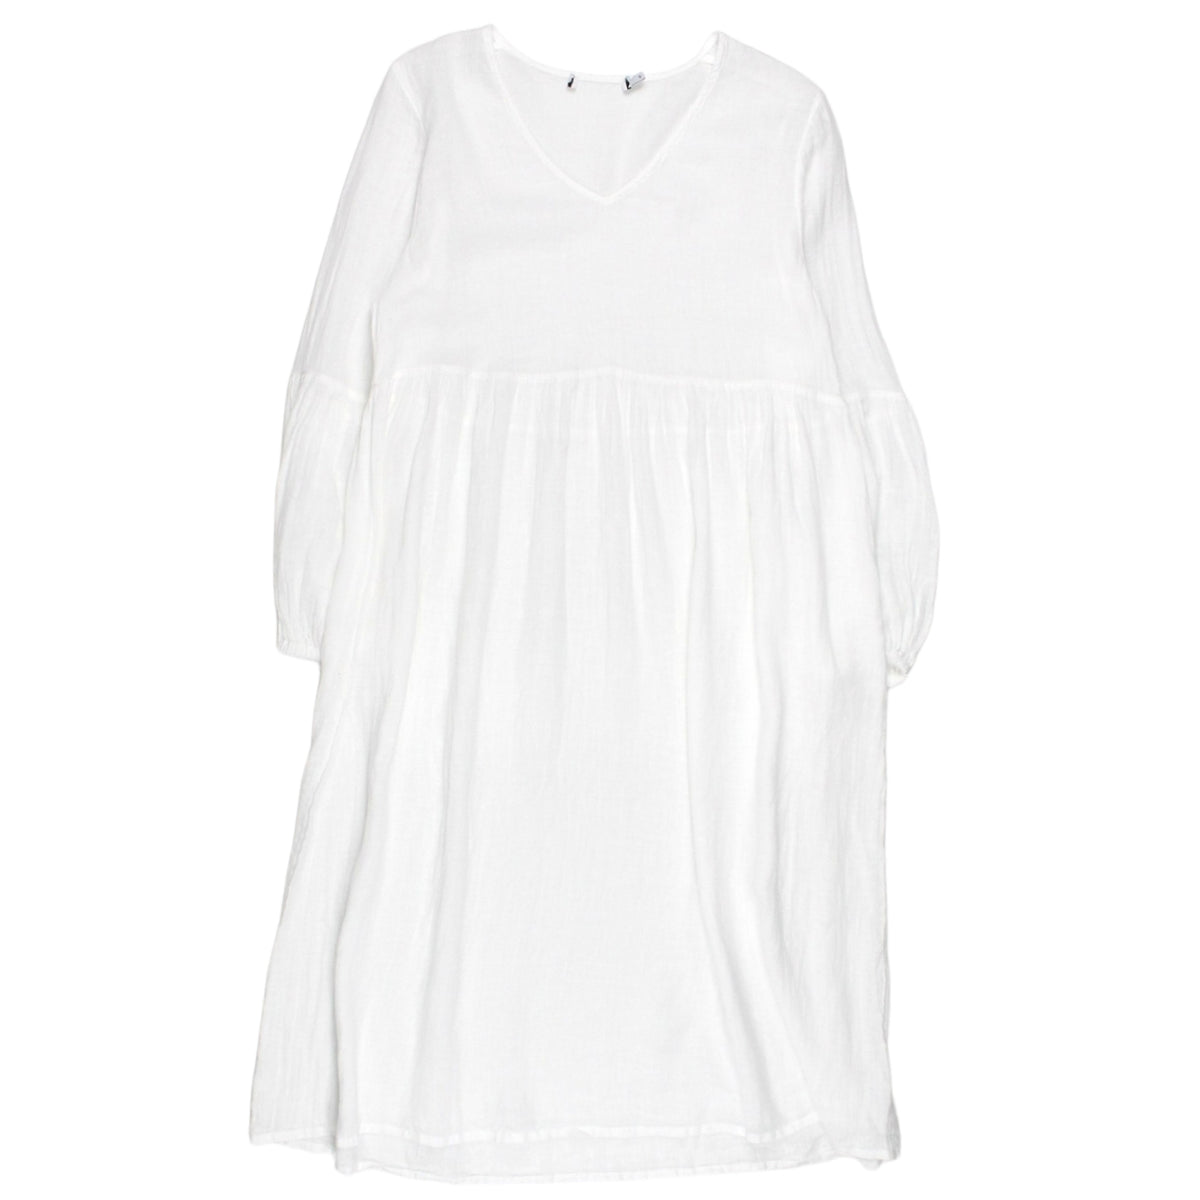 NRBY White Linen Midaxi Dress - Sample